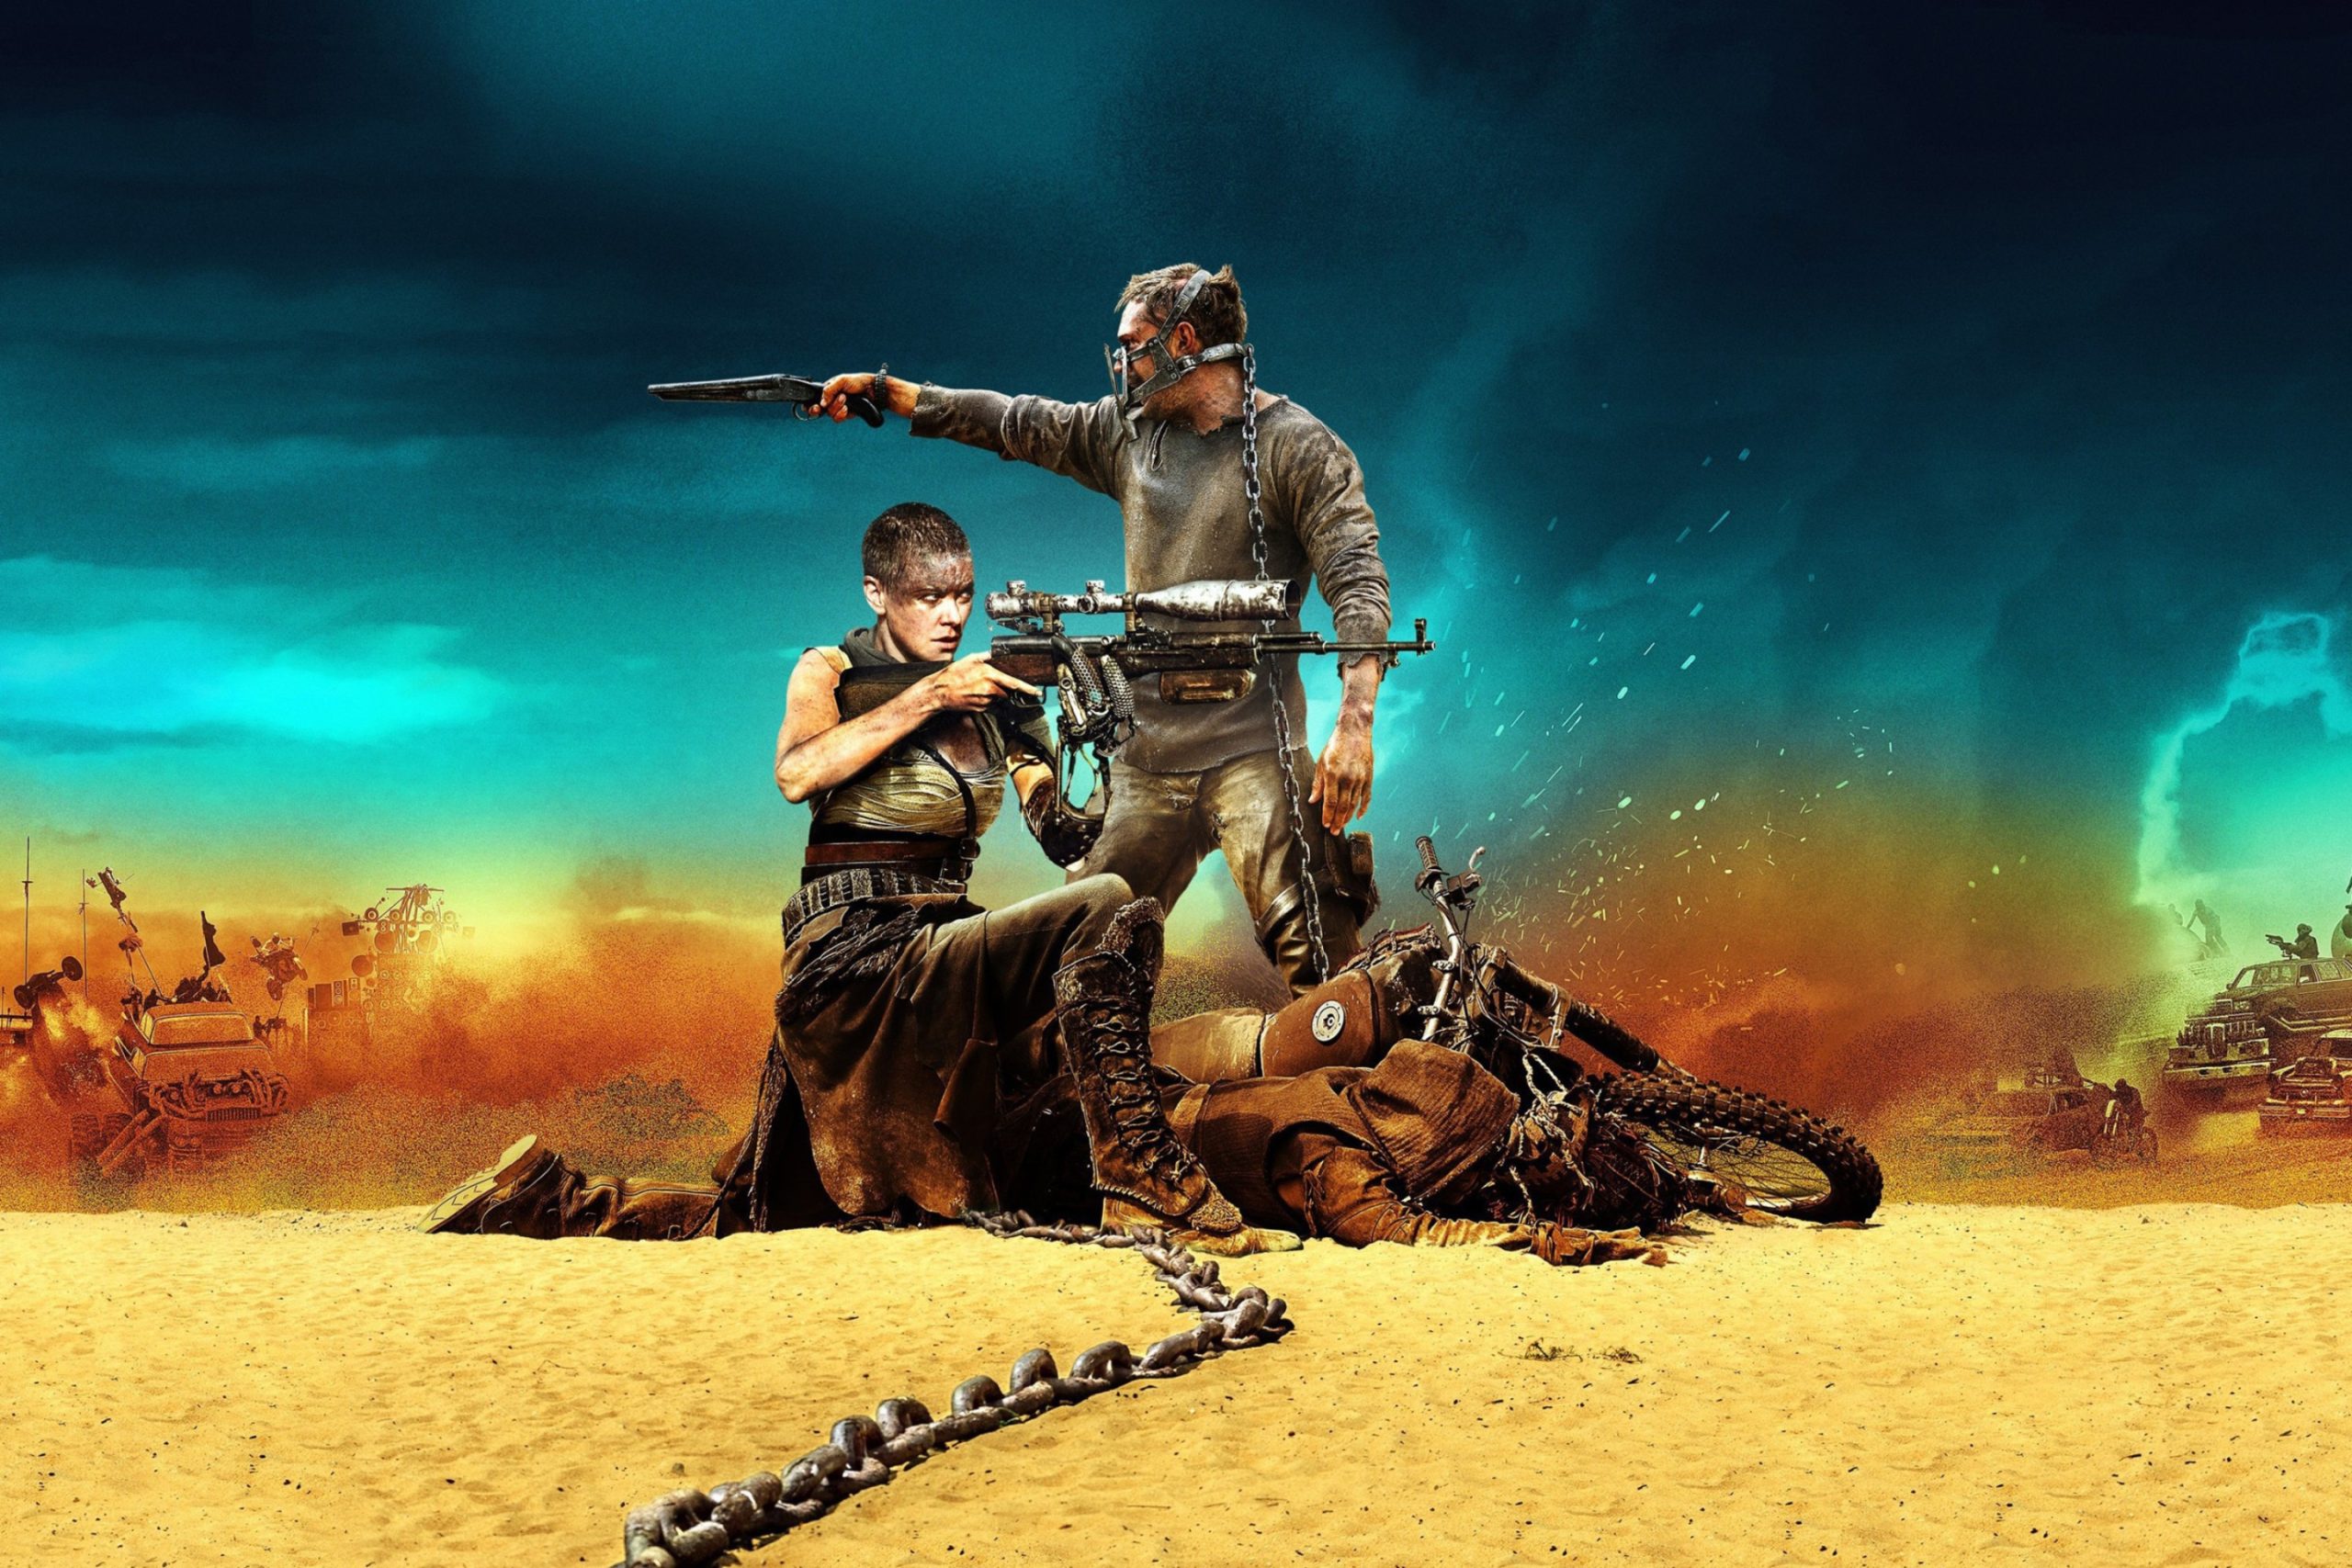 Can Furiosa: A Mad Max Saga Overcome Box Office Struggles?